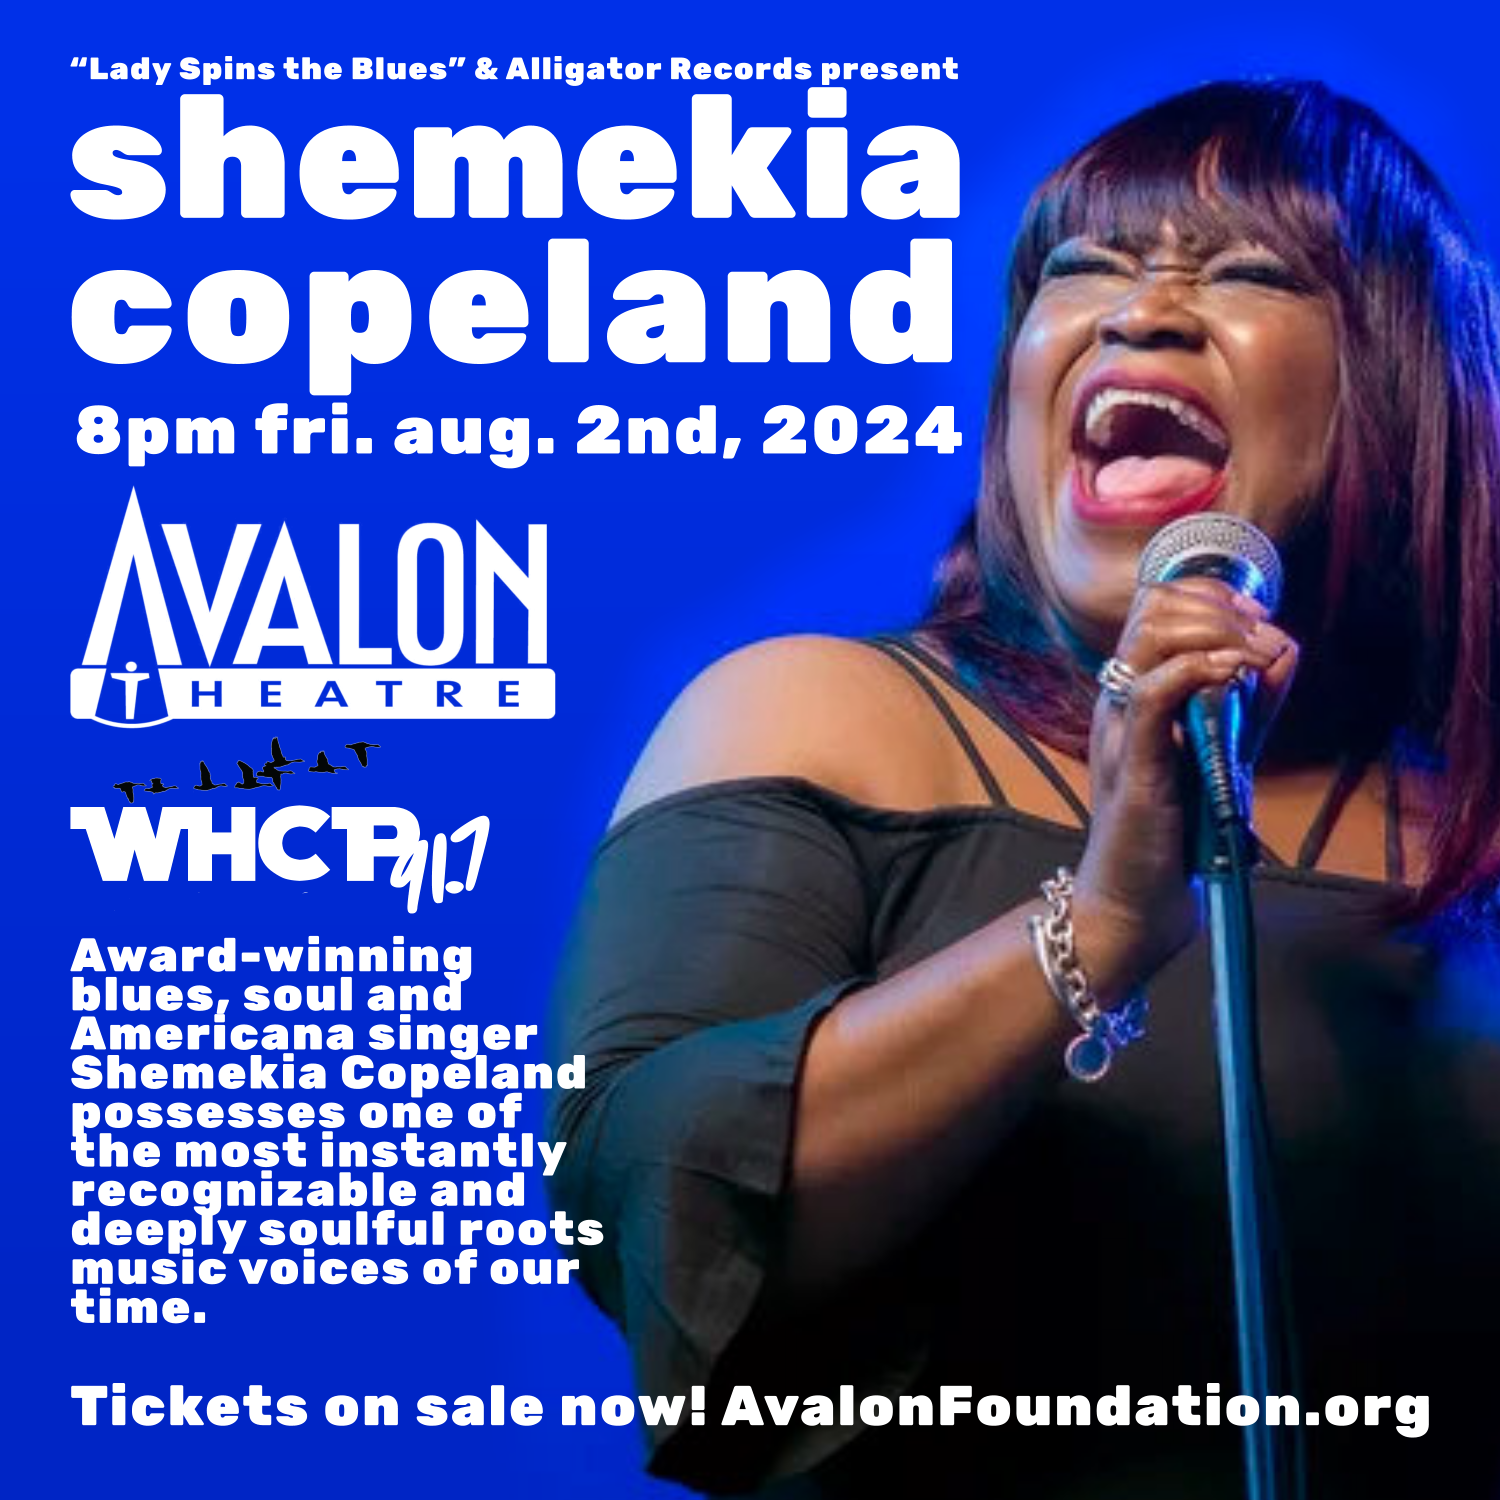 Shemekia Copeland at the Avalon Theatre Aug 2nd, 2024